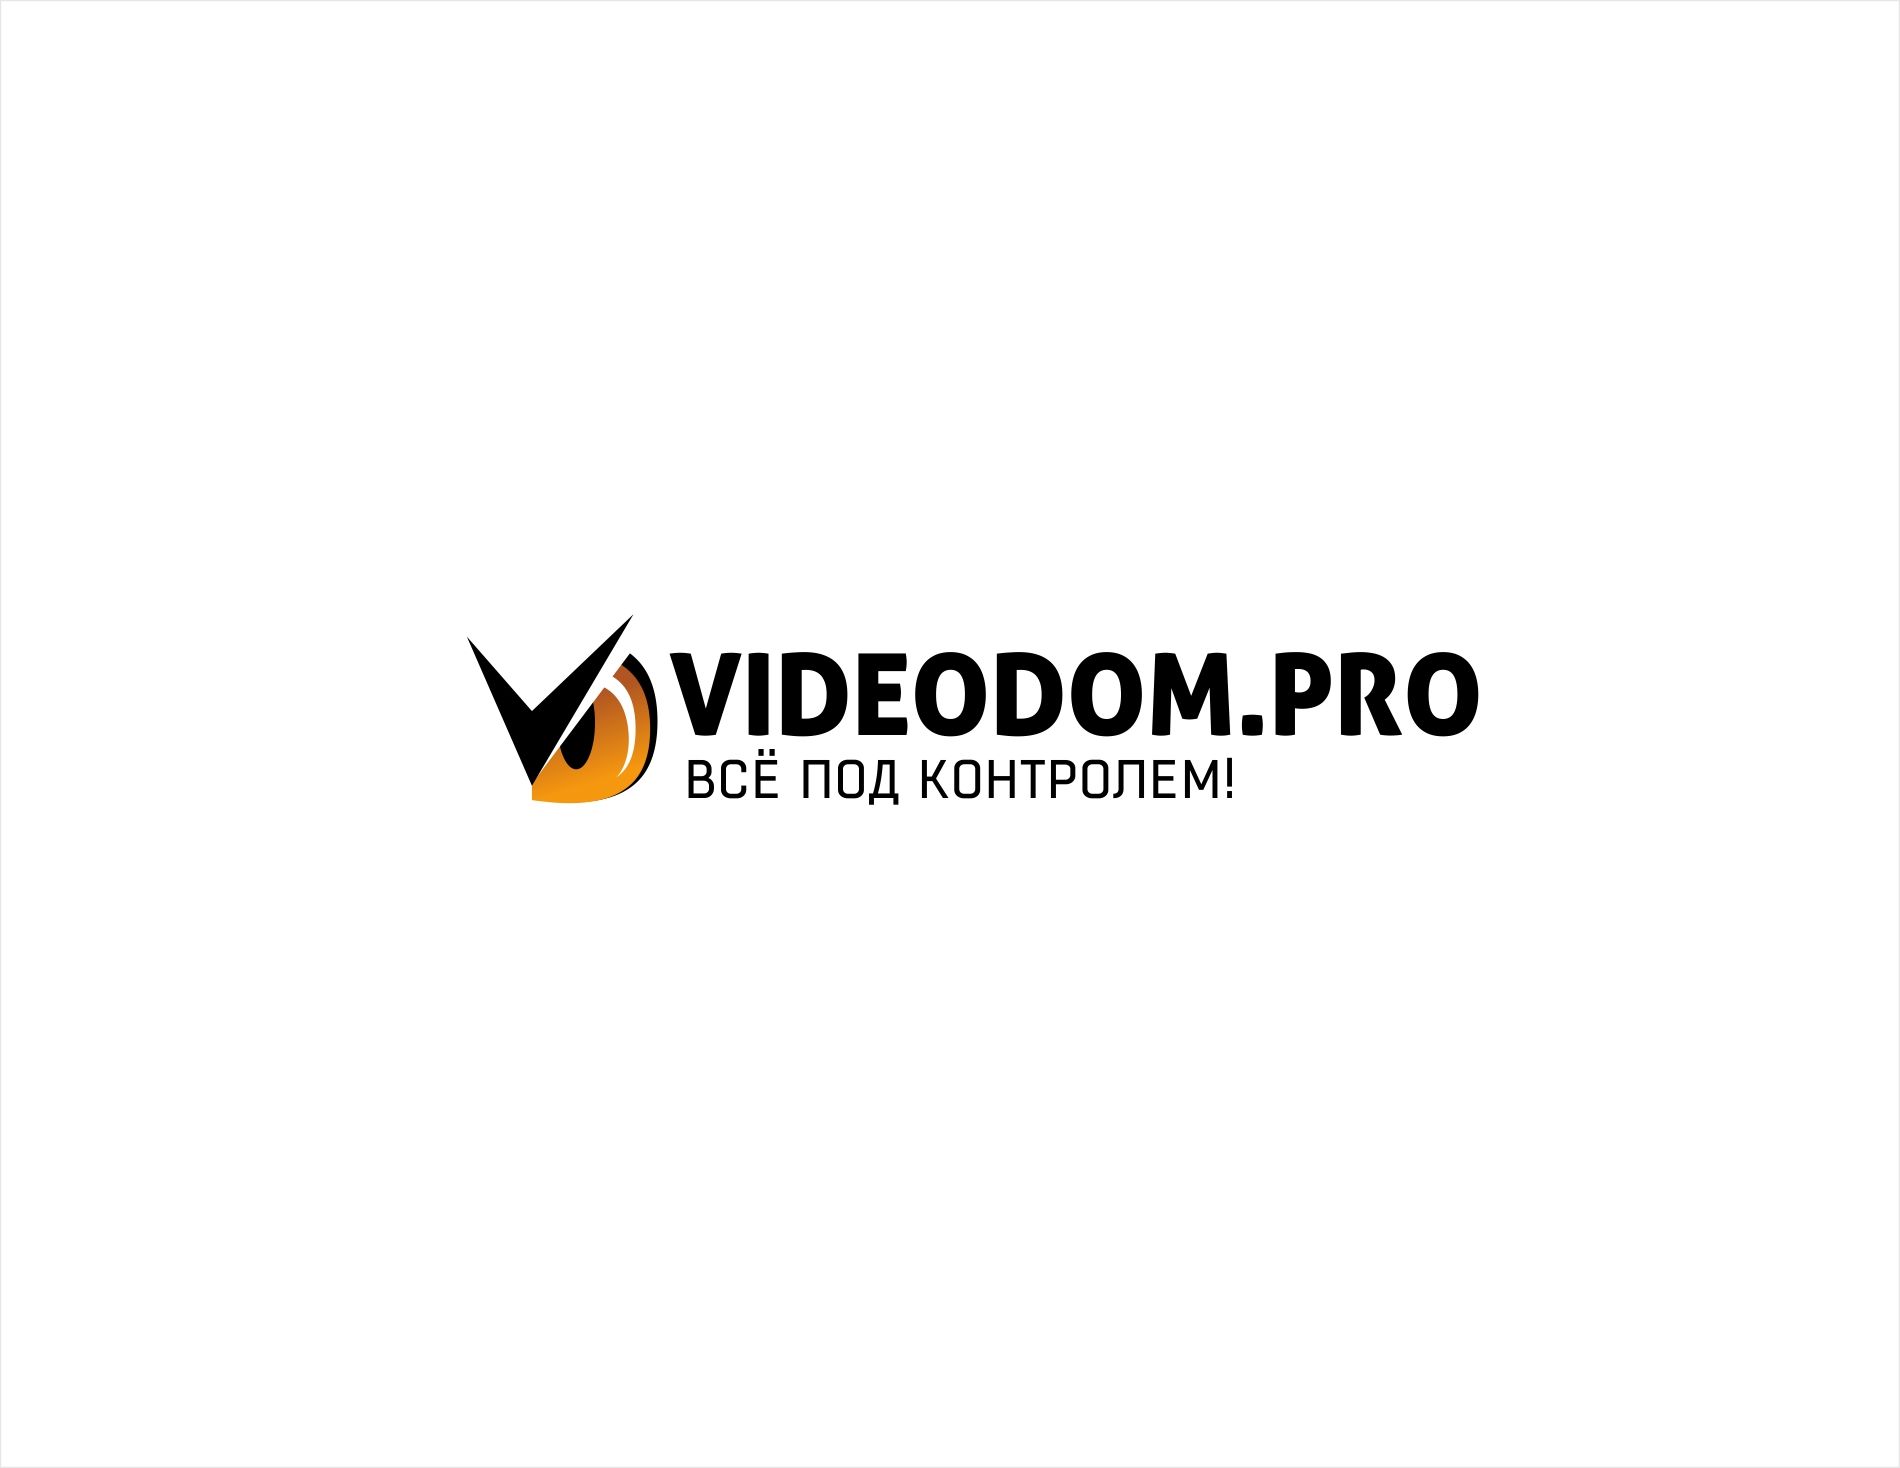 Логотип для videodom.pro - дизайнер kras-sky